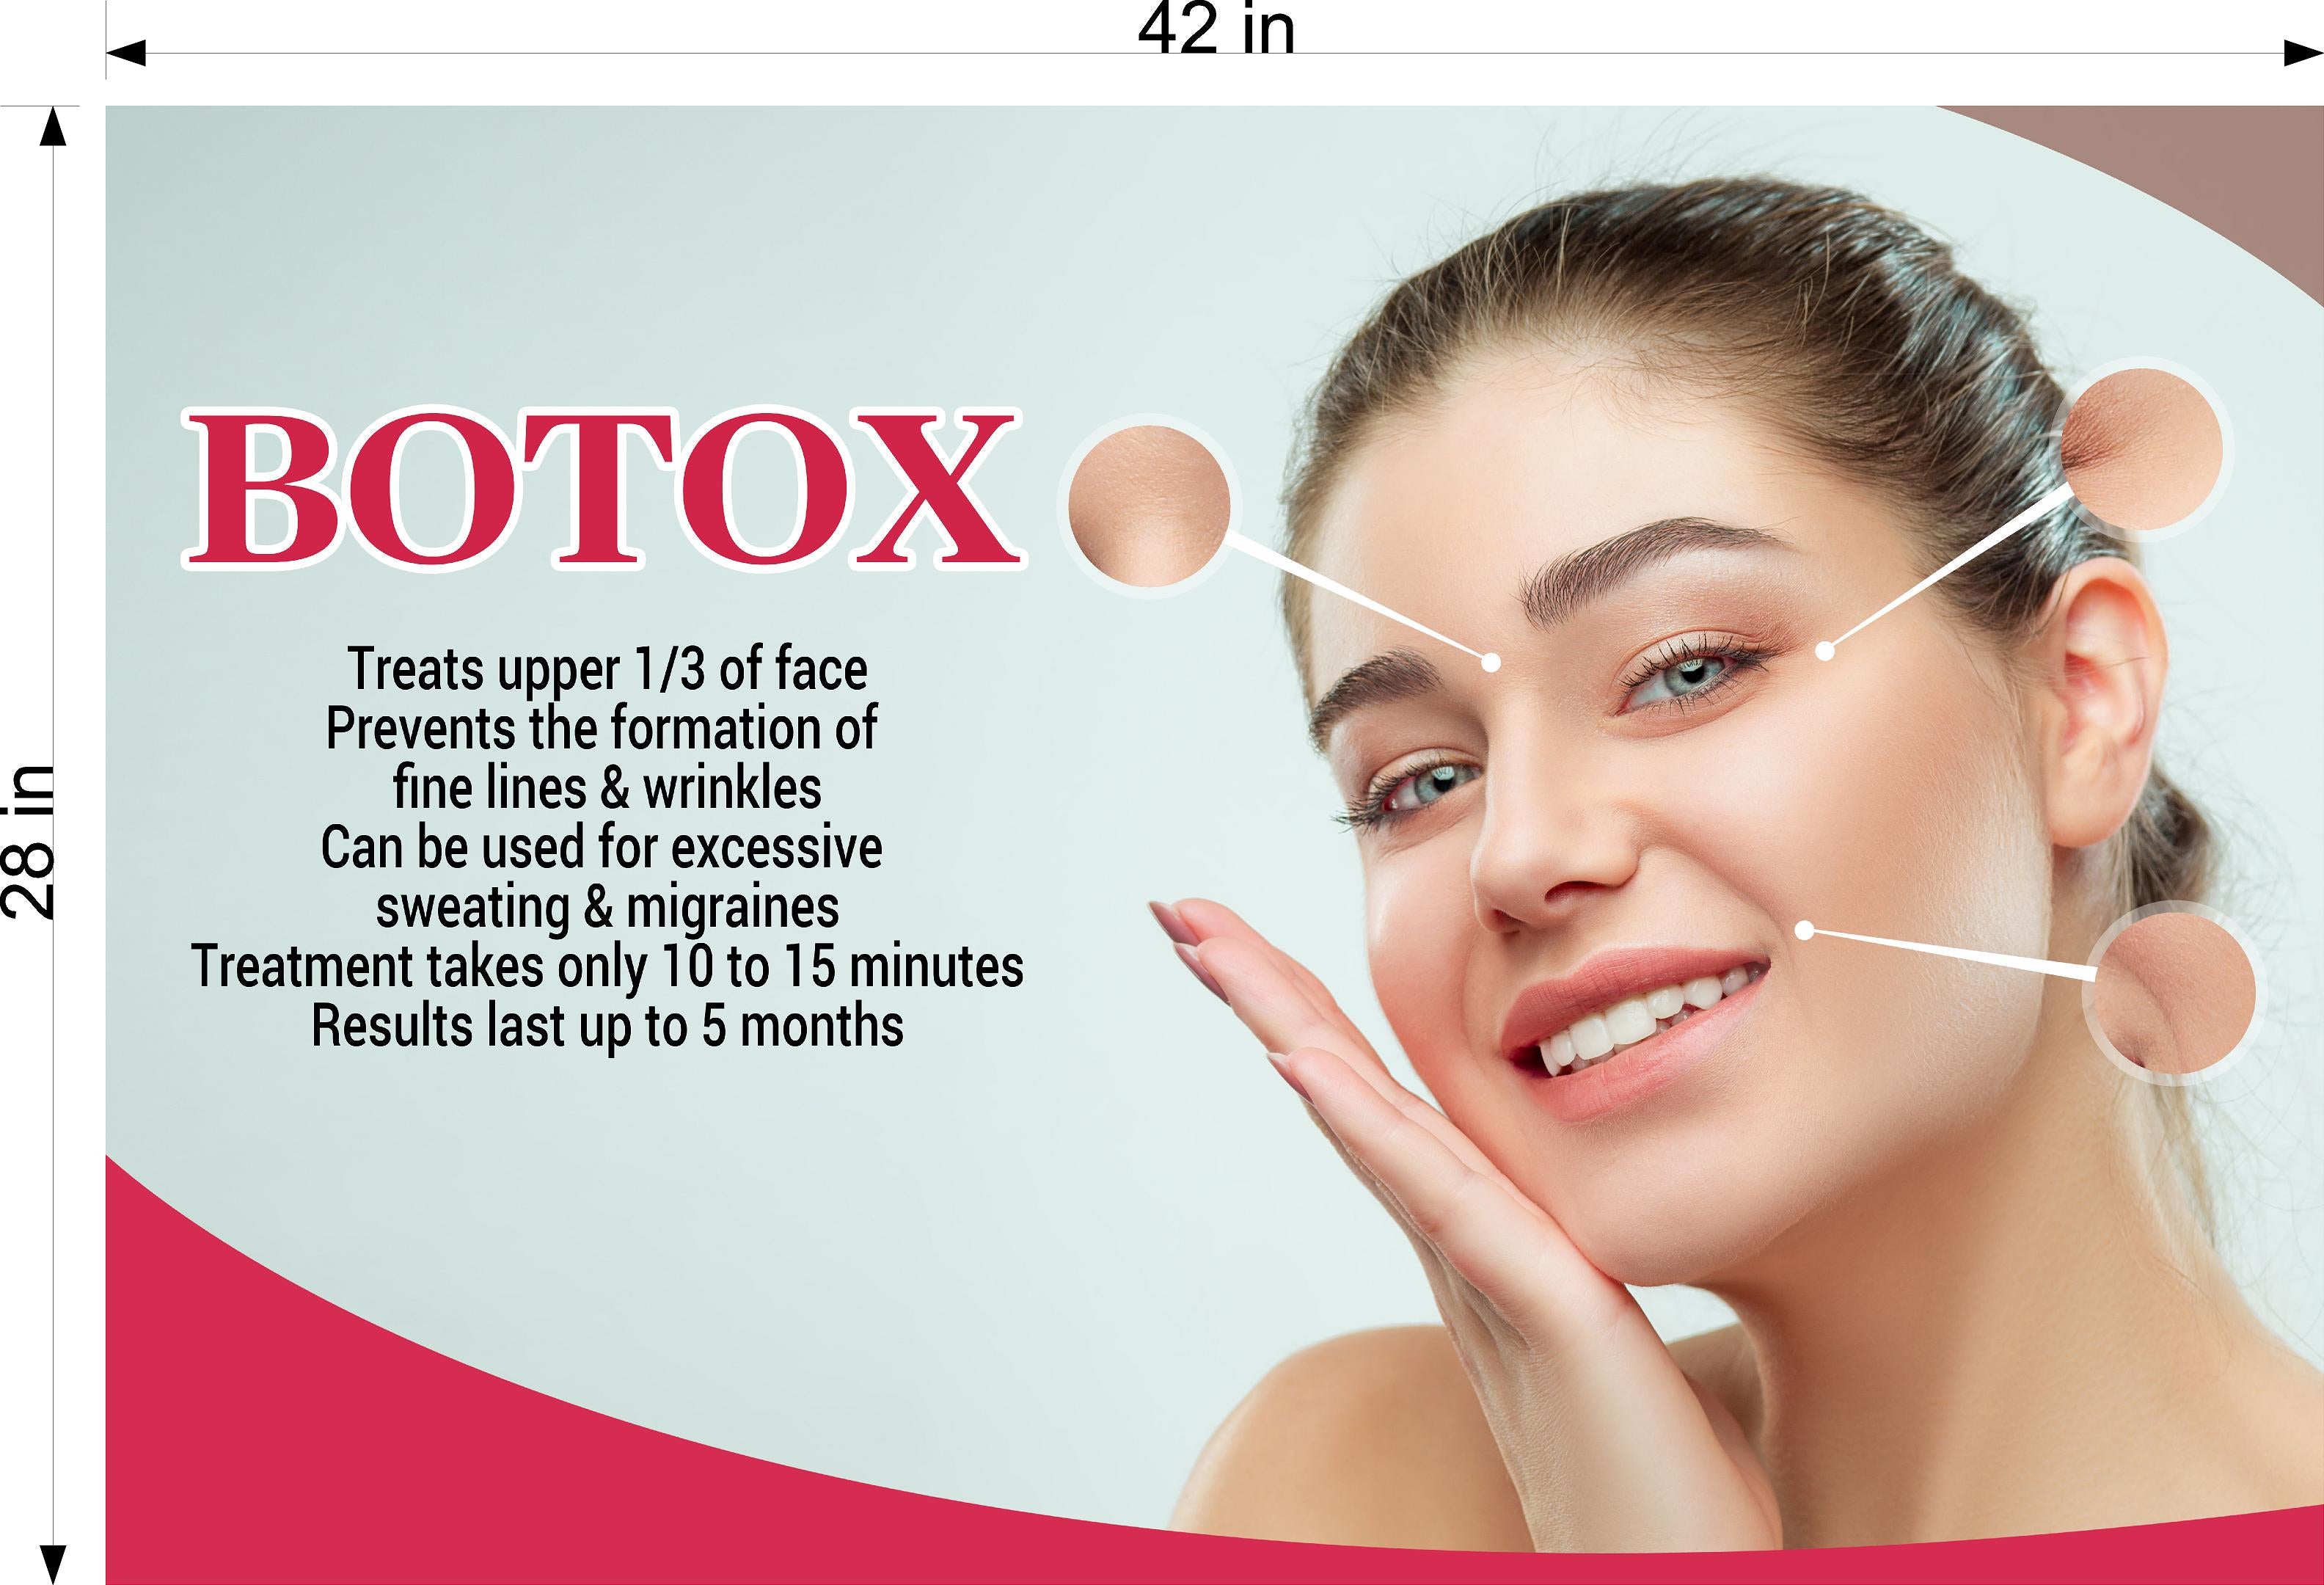 Botox 09 Wallpaper Poster with Adhesive Backing Wall Sticker Decor Indoors Interior Sign Horizontal